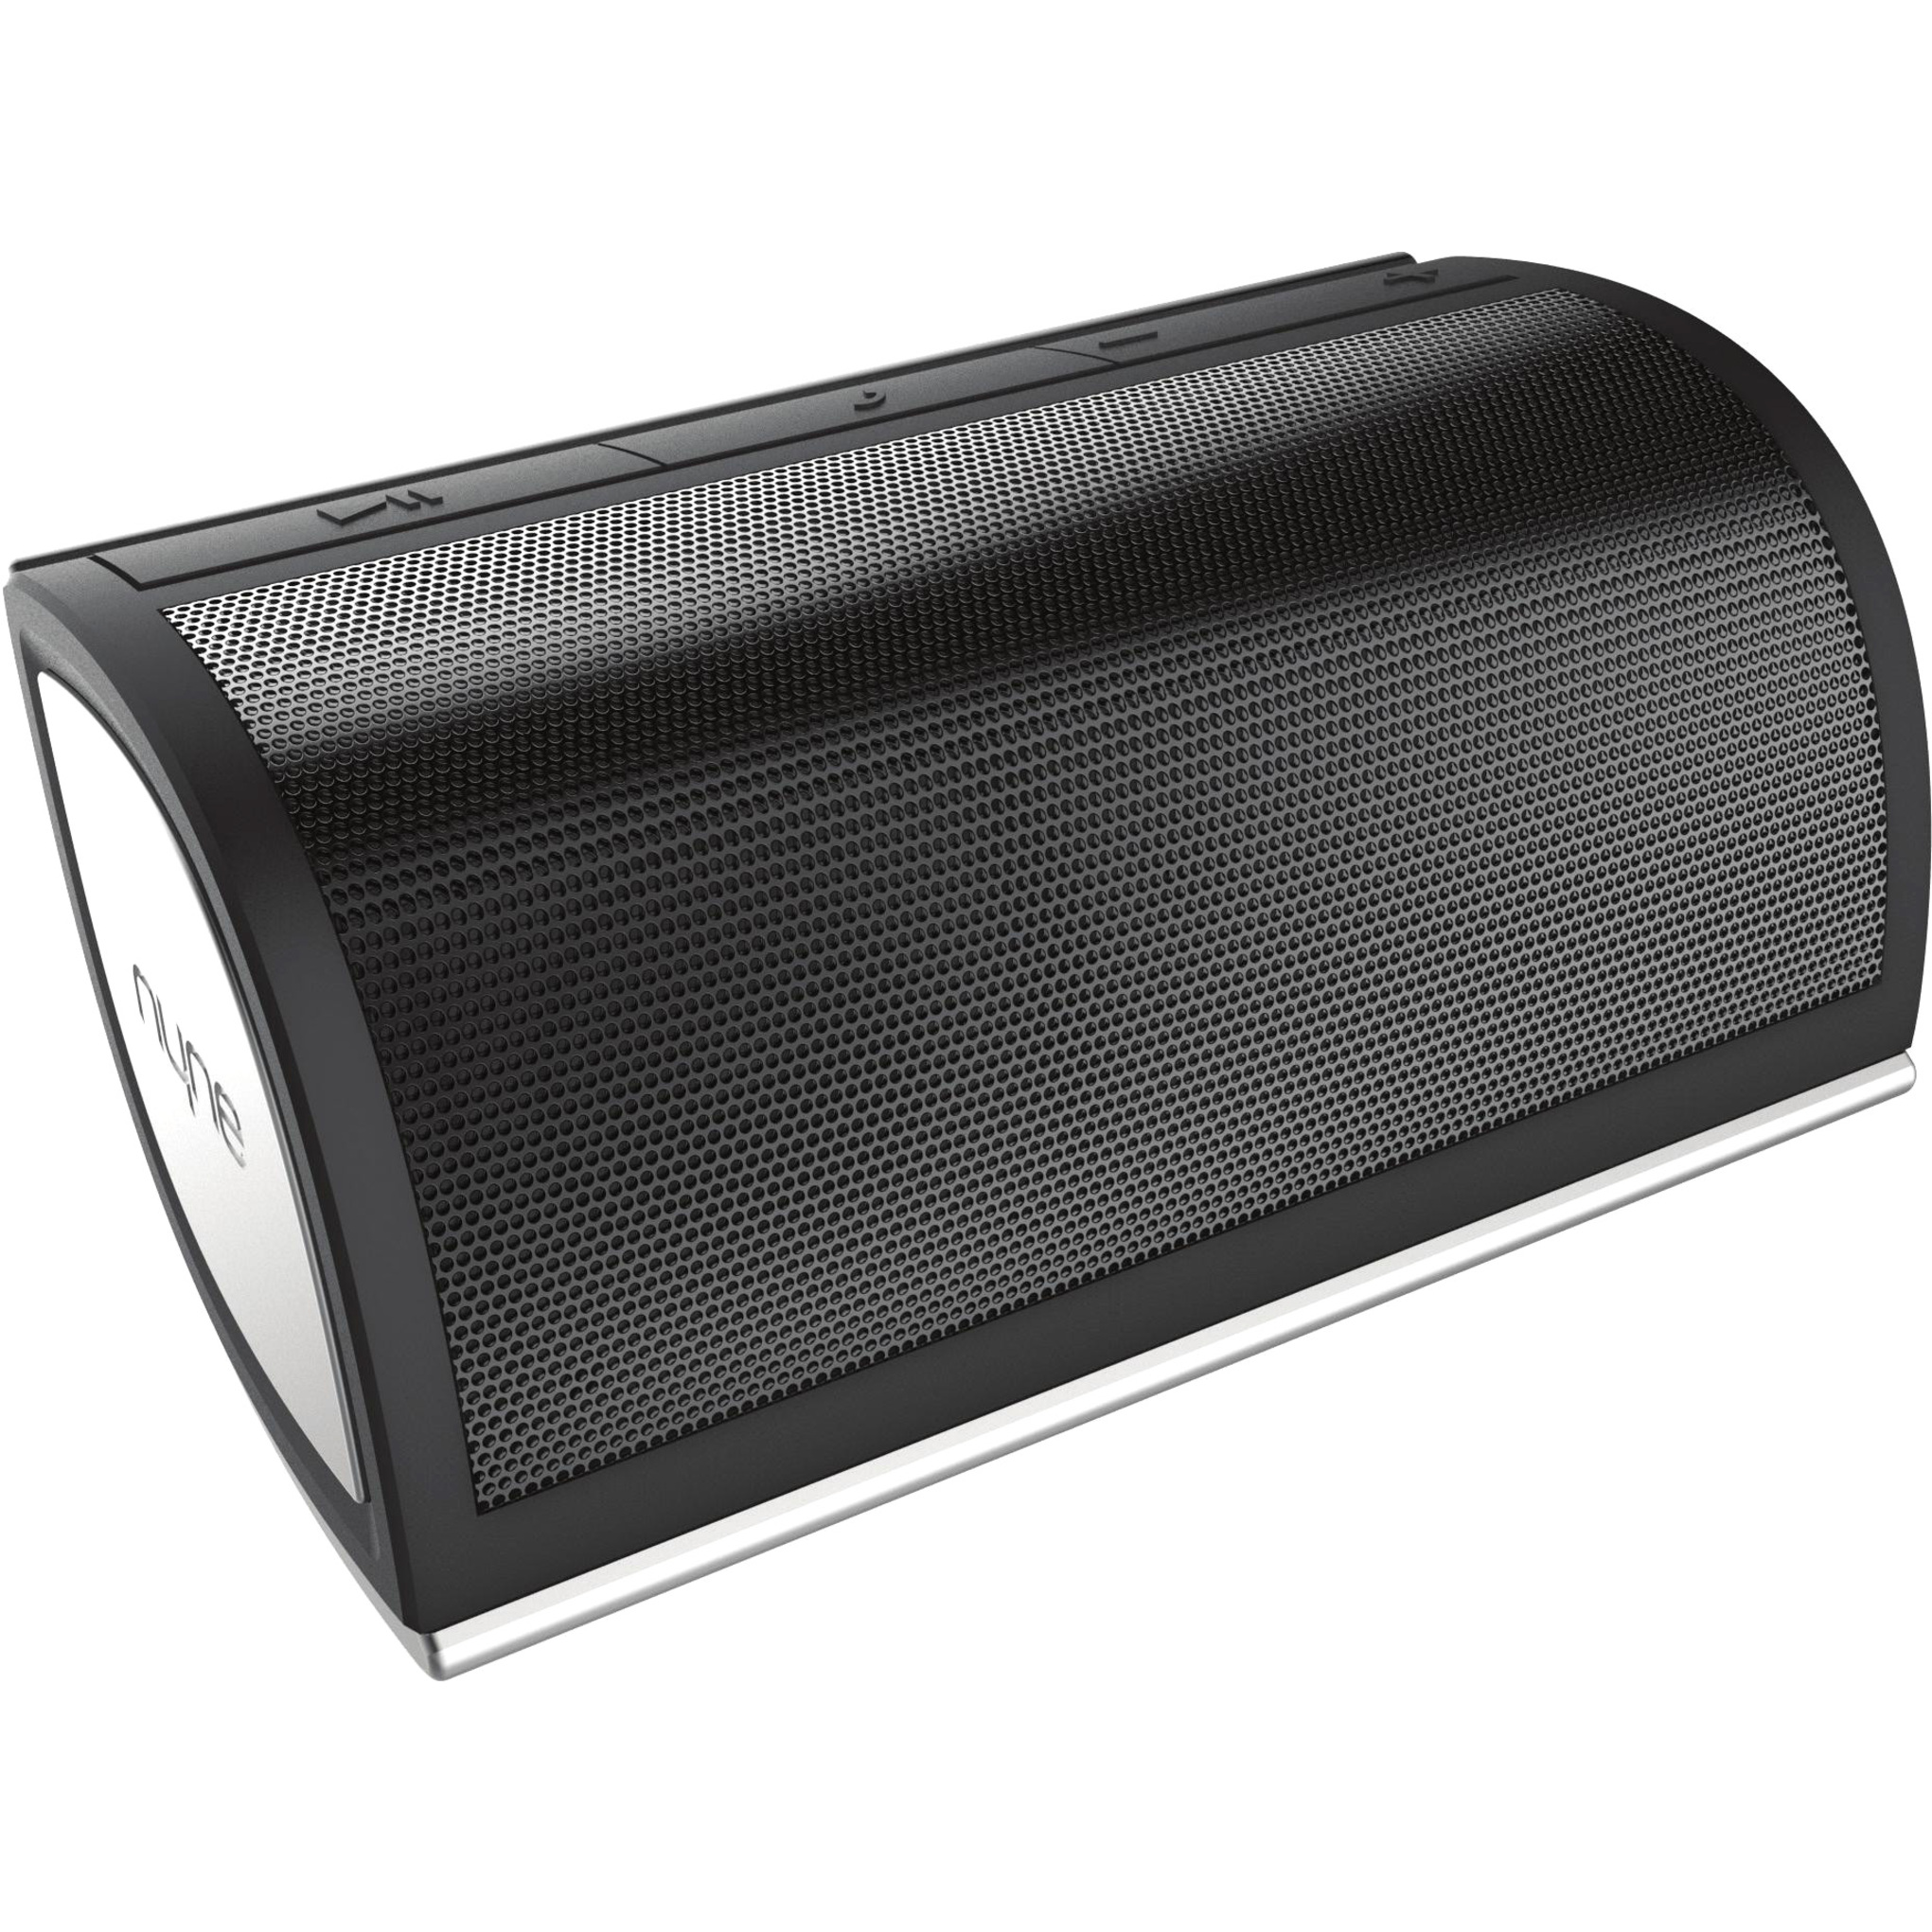 Nyne Portable Bluetooth Speaker, Black, Nyne Mini - image 1 of 4